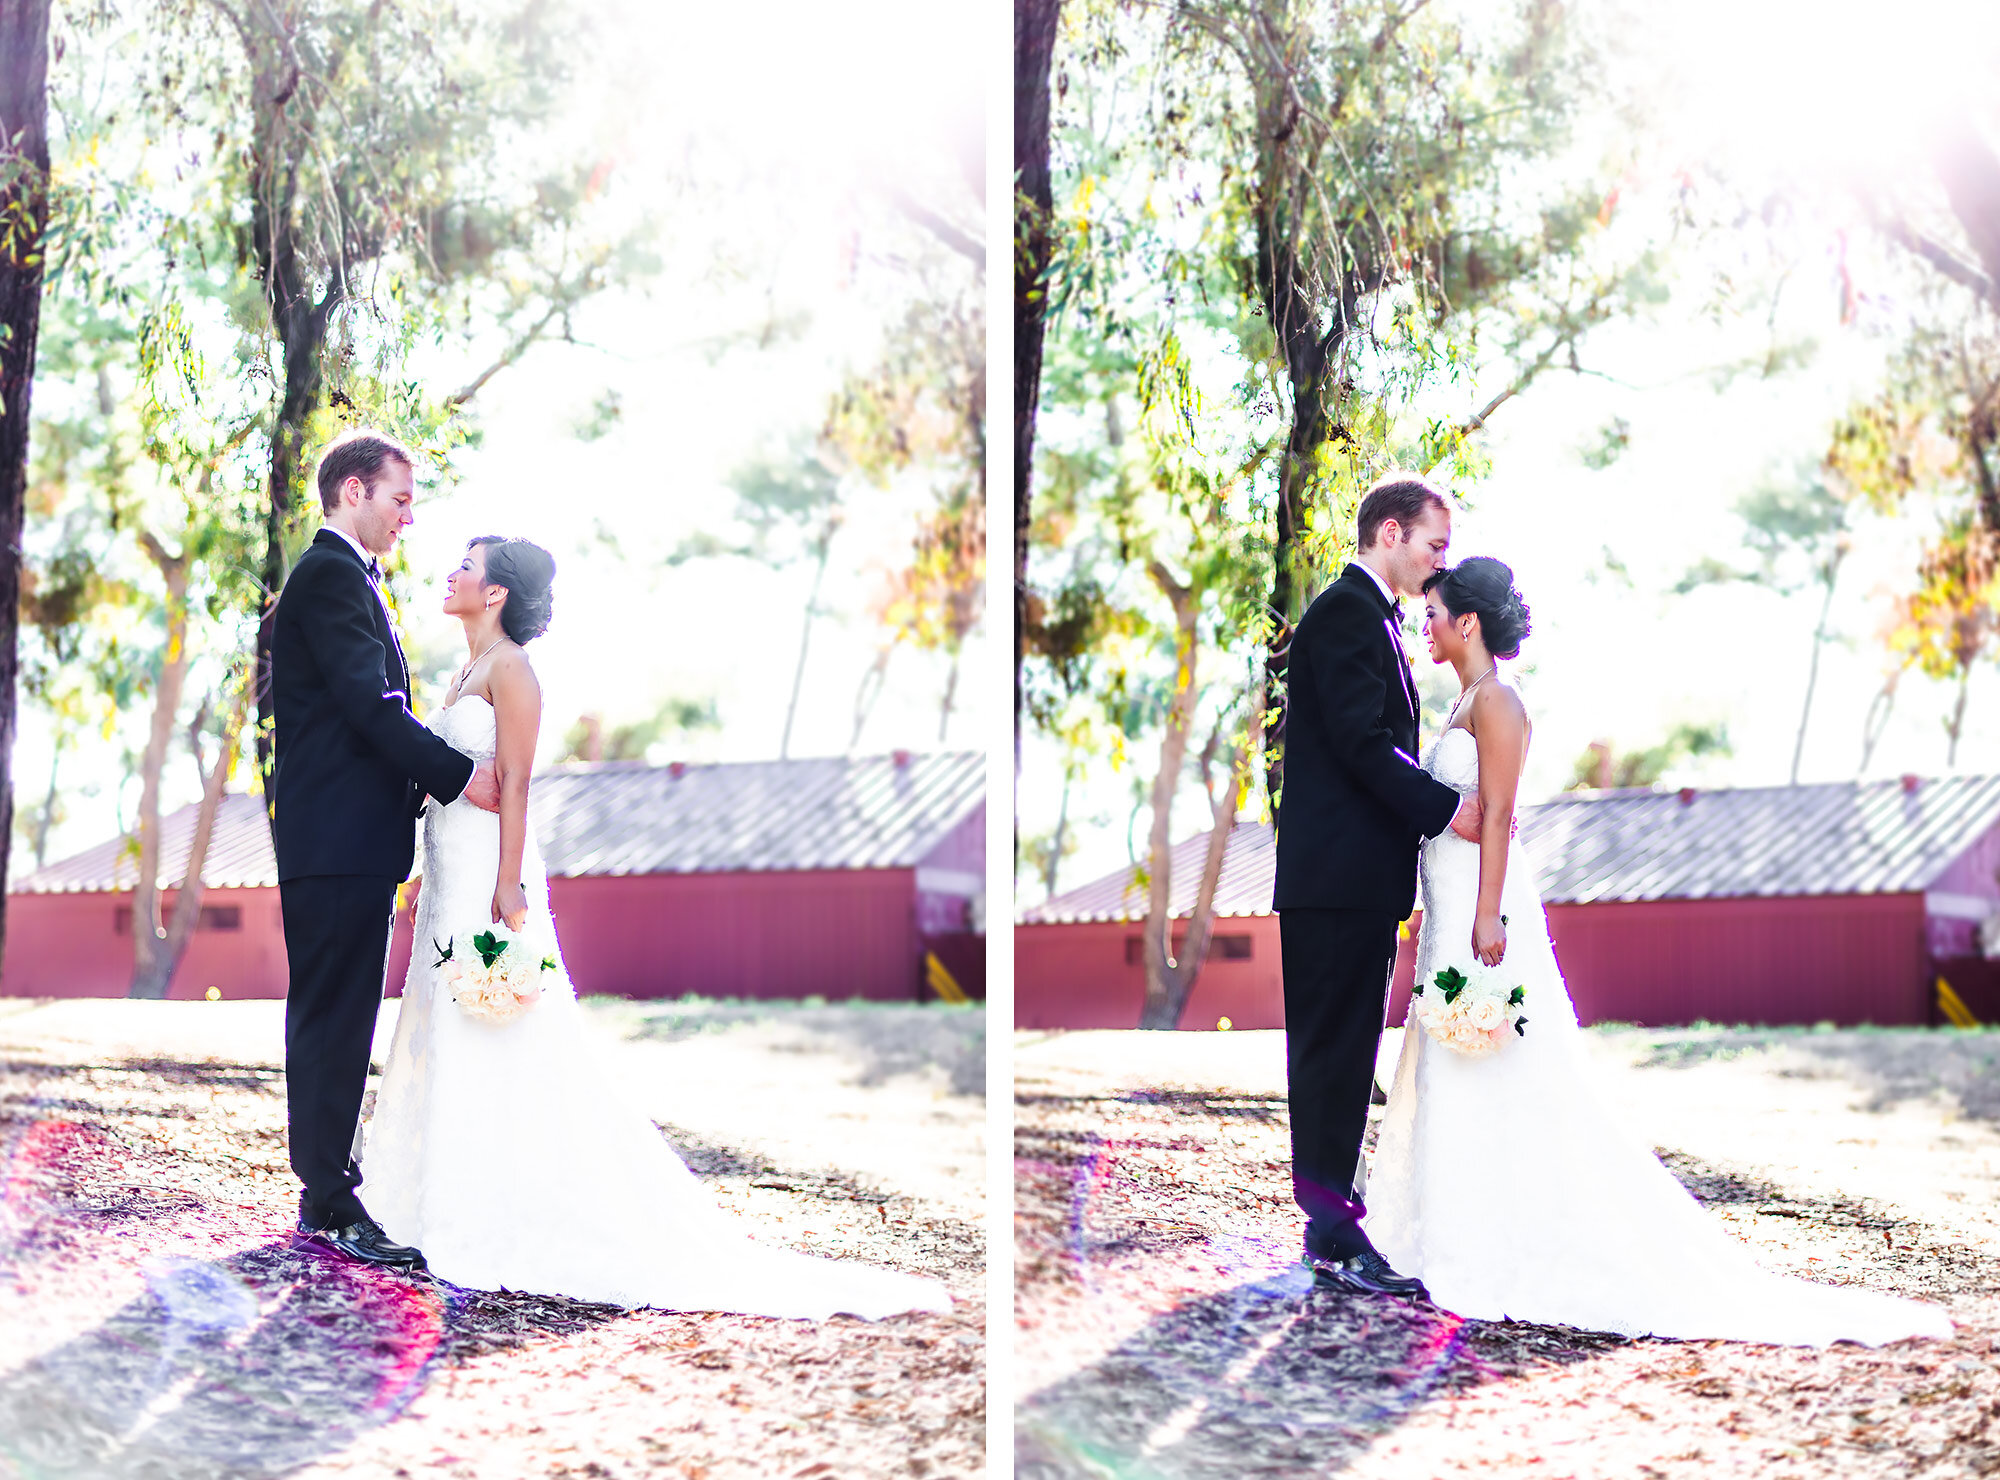 Somerville Wedding Photographer  | Stephen Grant Photography